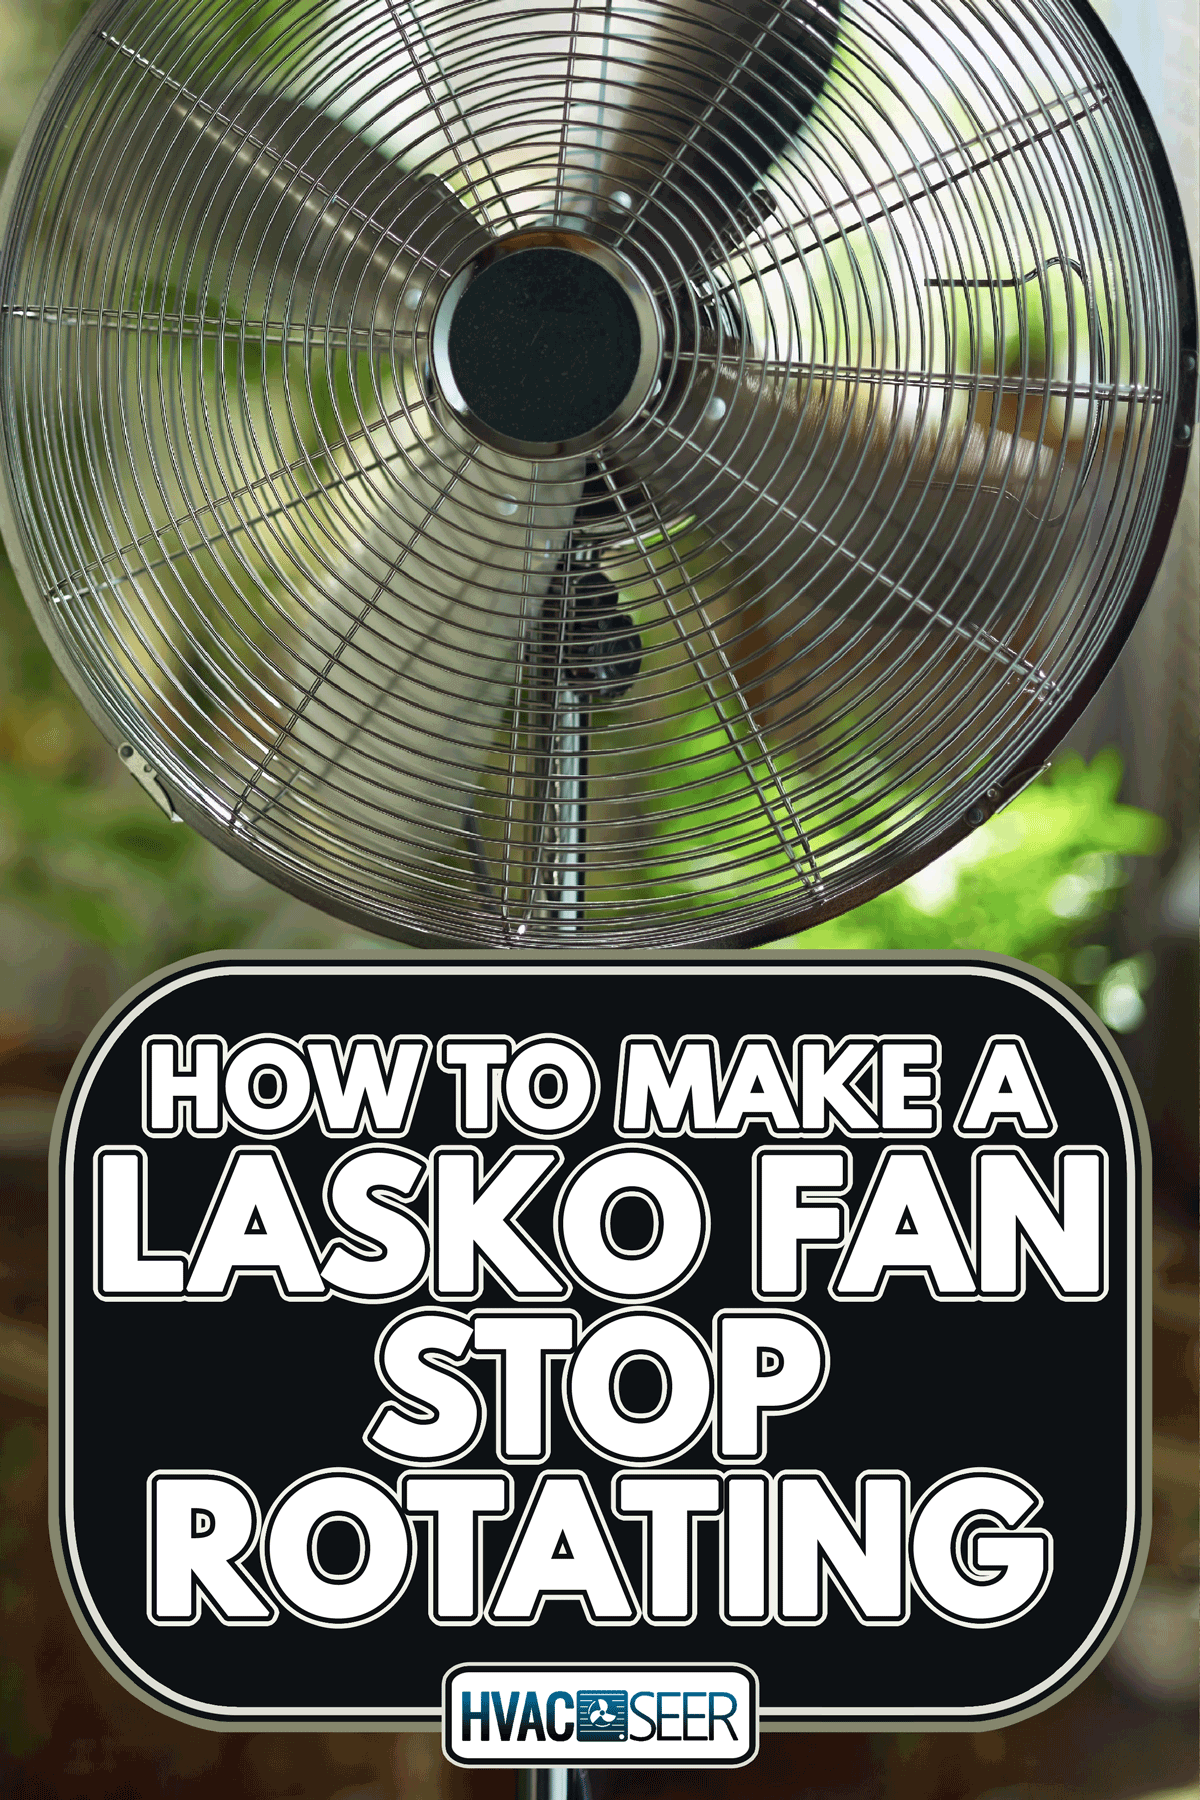 Modern metallic floor stand electric fan, How To Make a Lasko Fan Stop Rotating